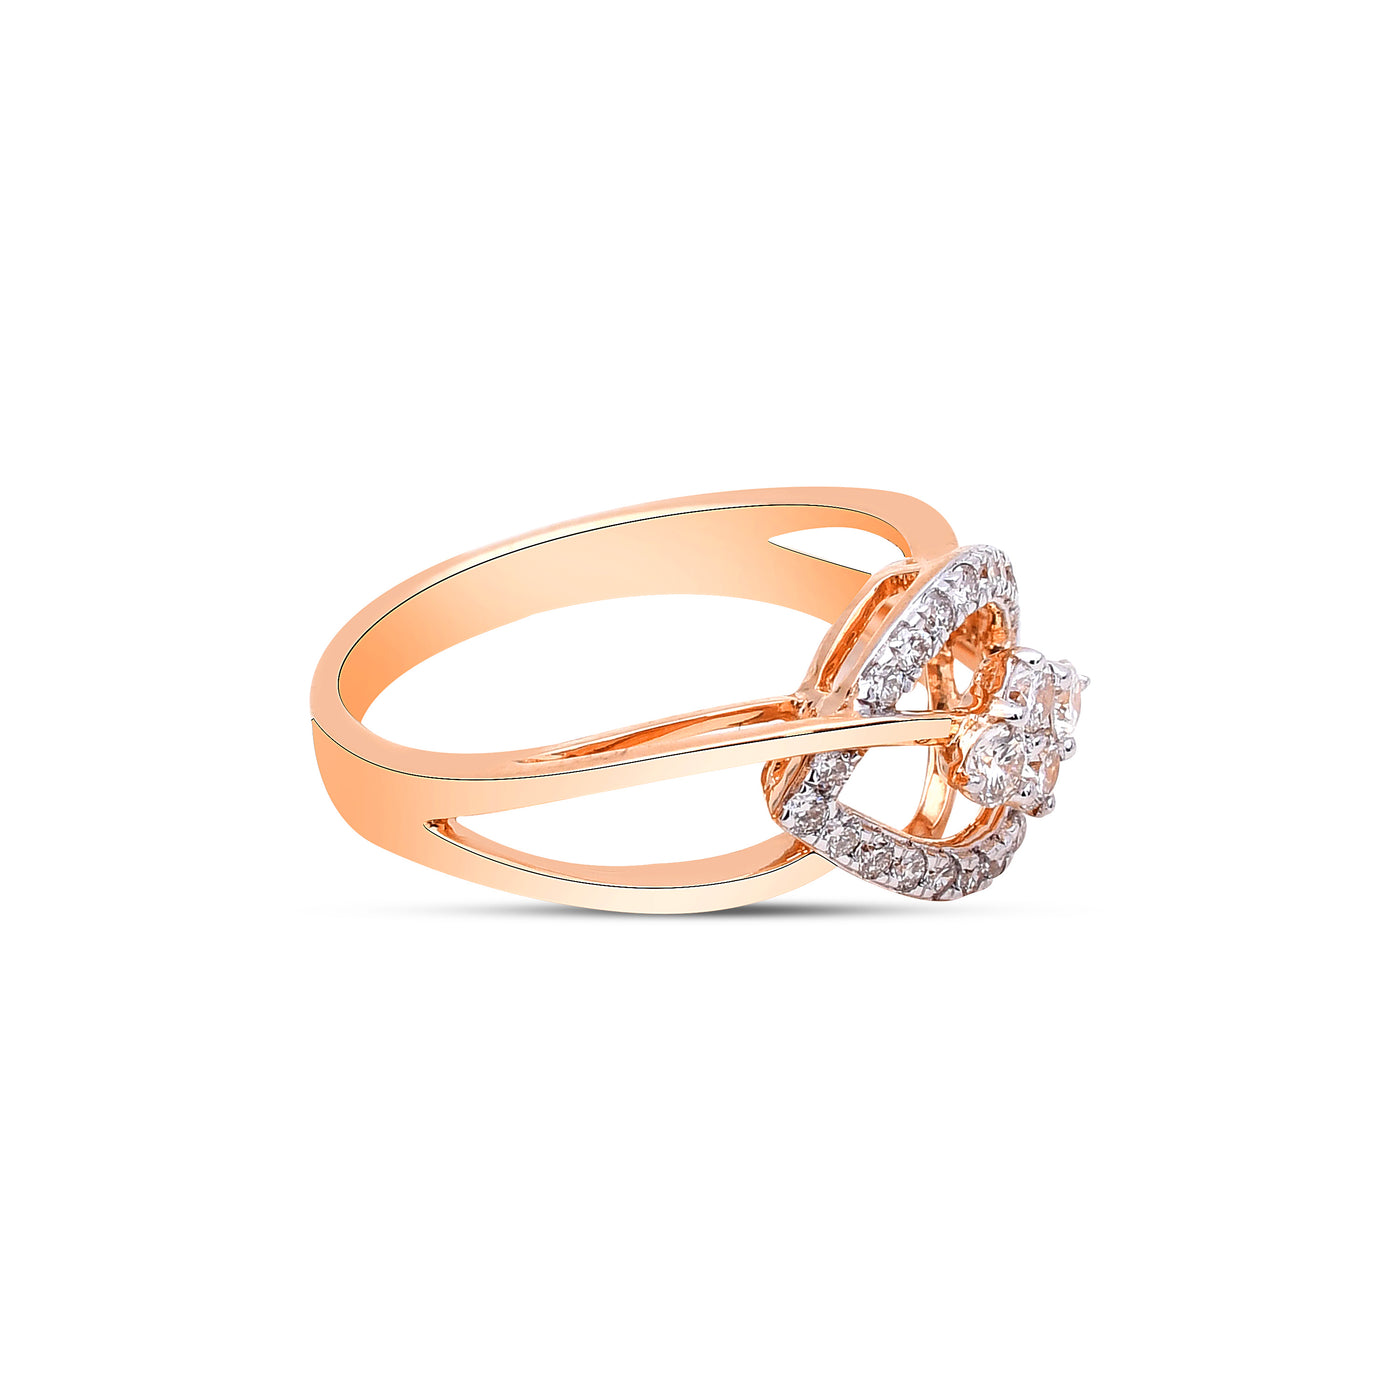 The Ramya Diamond Ring